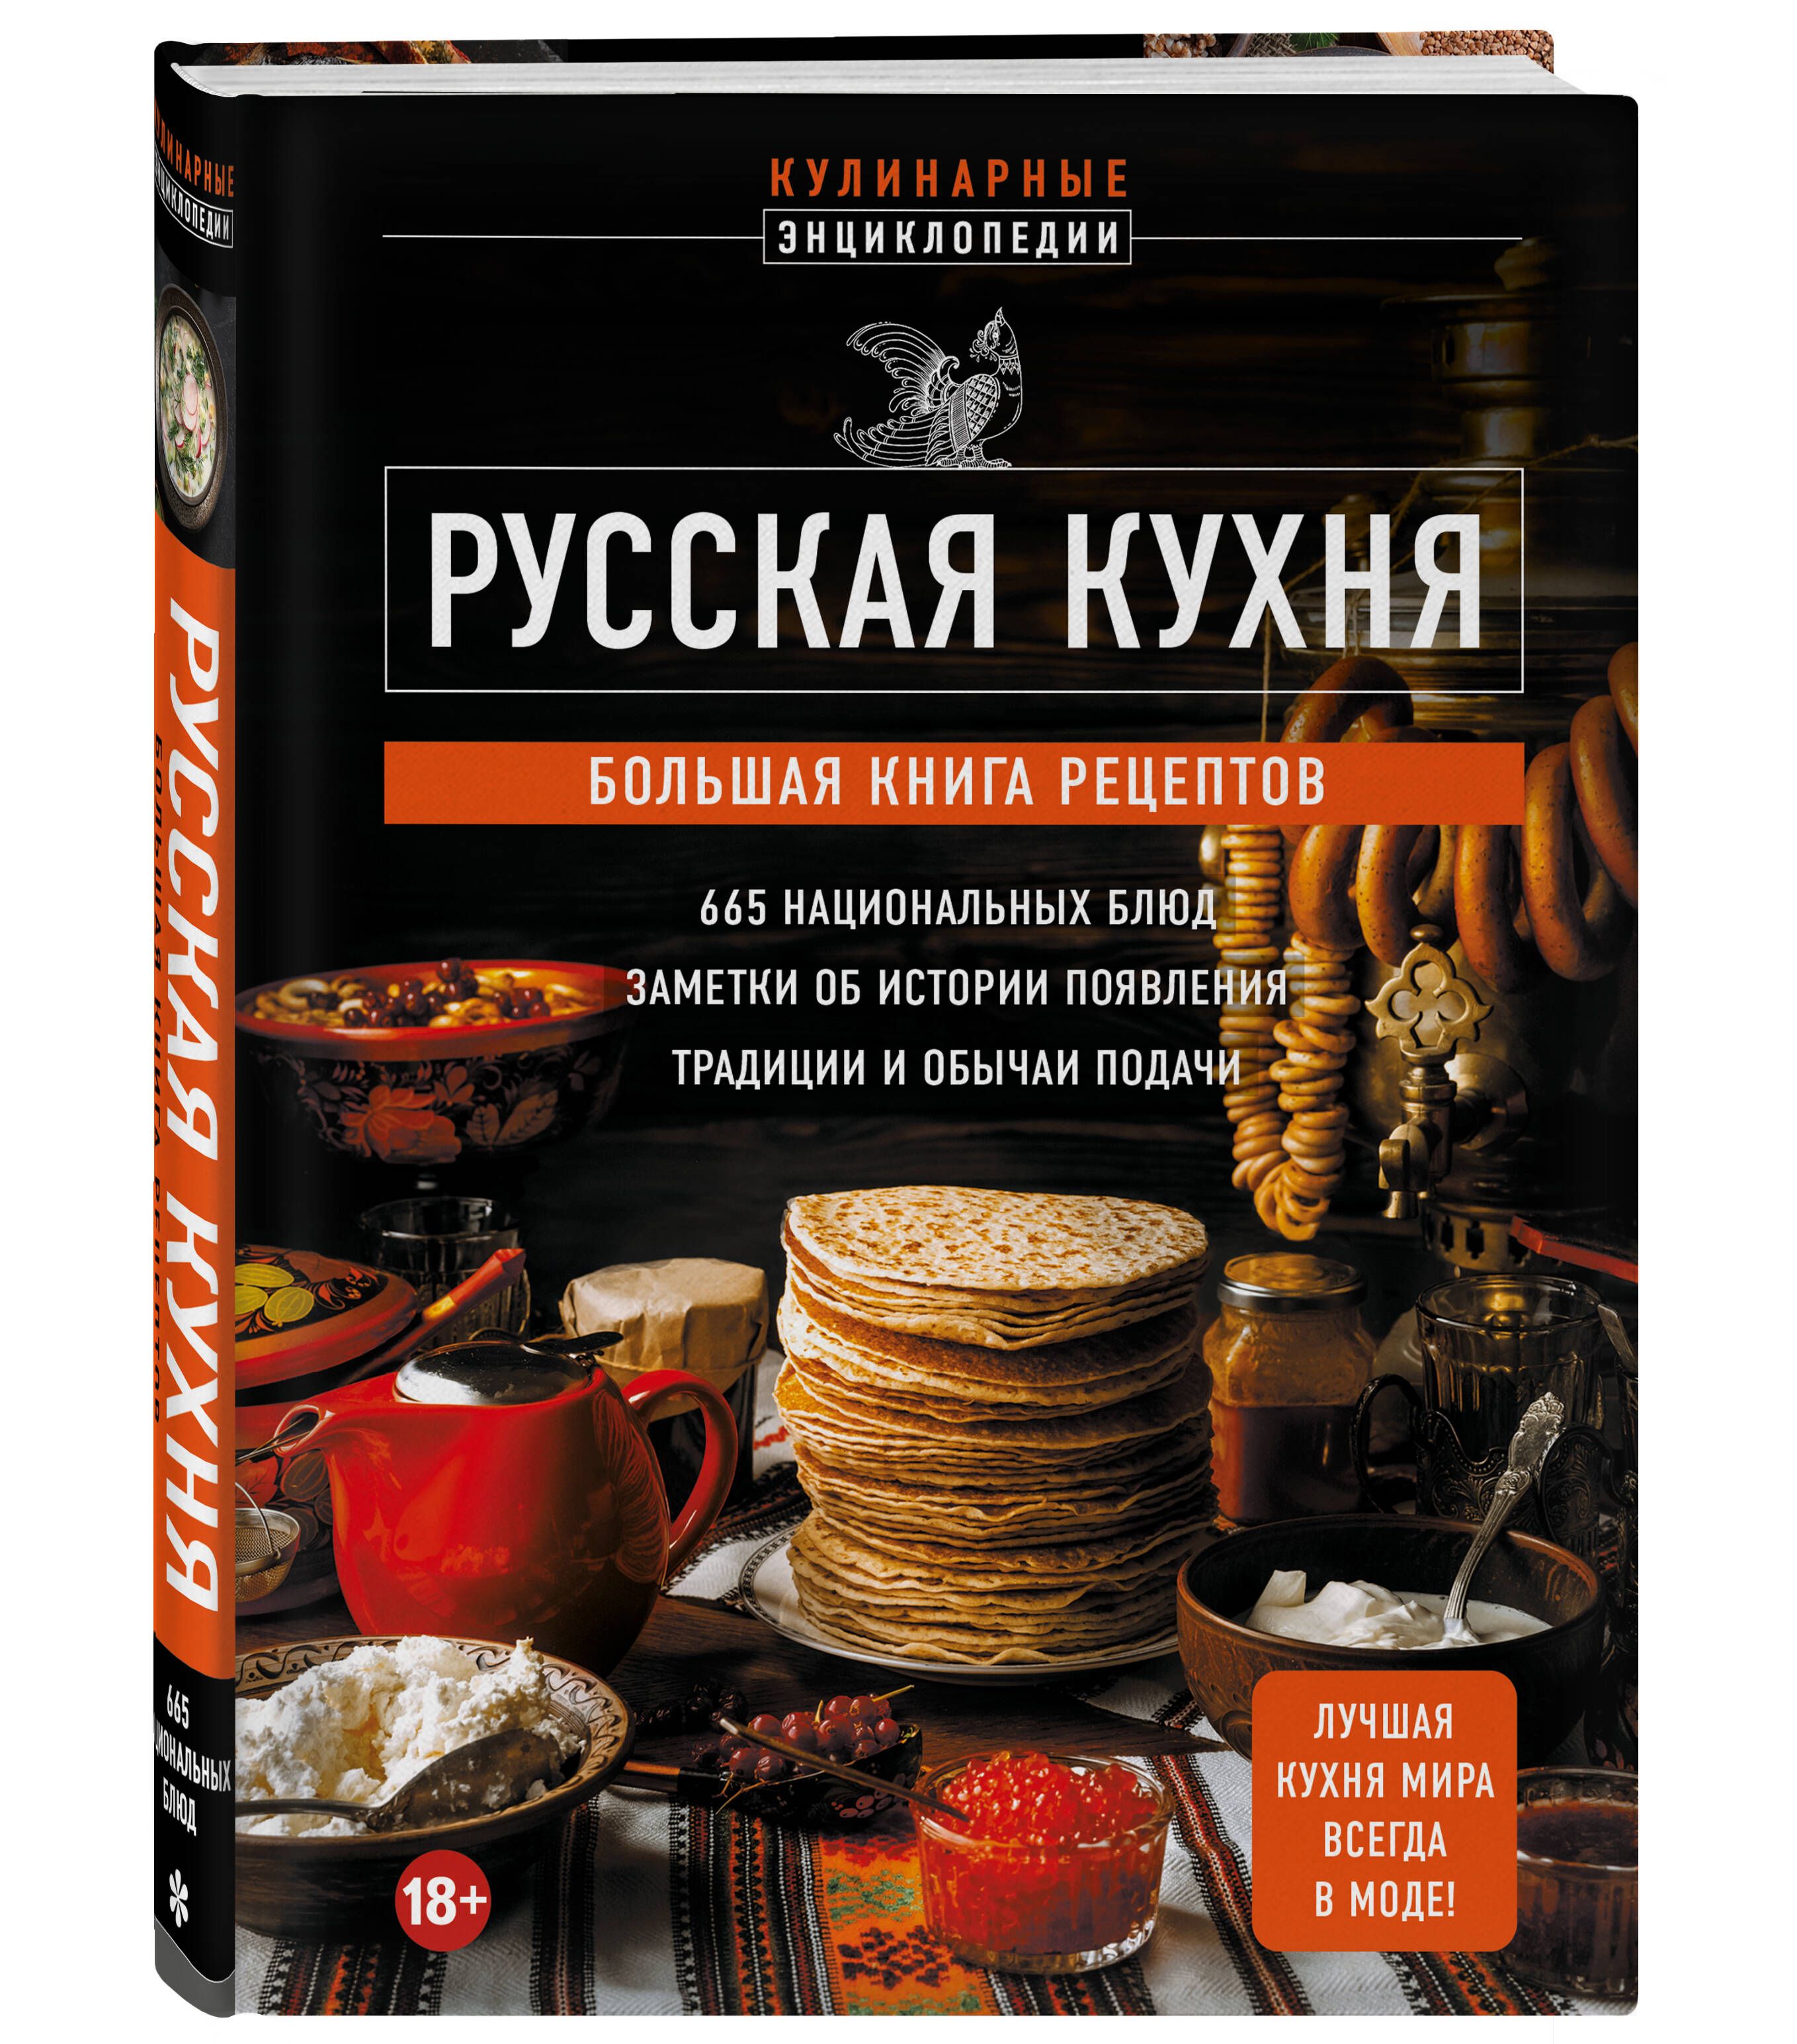 Русская кухня, рецепты с фото